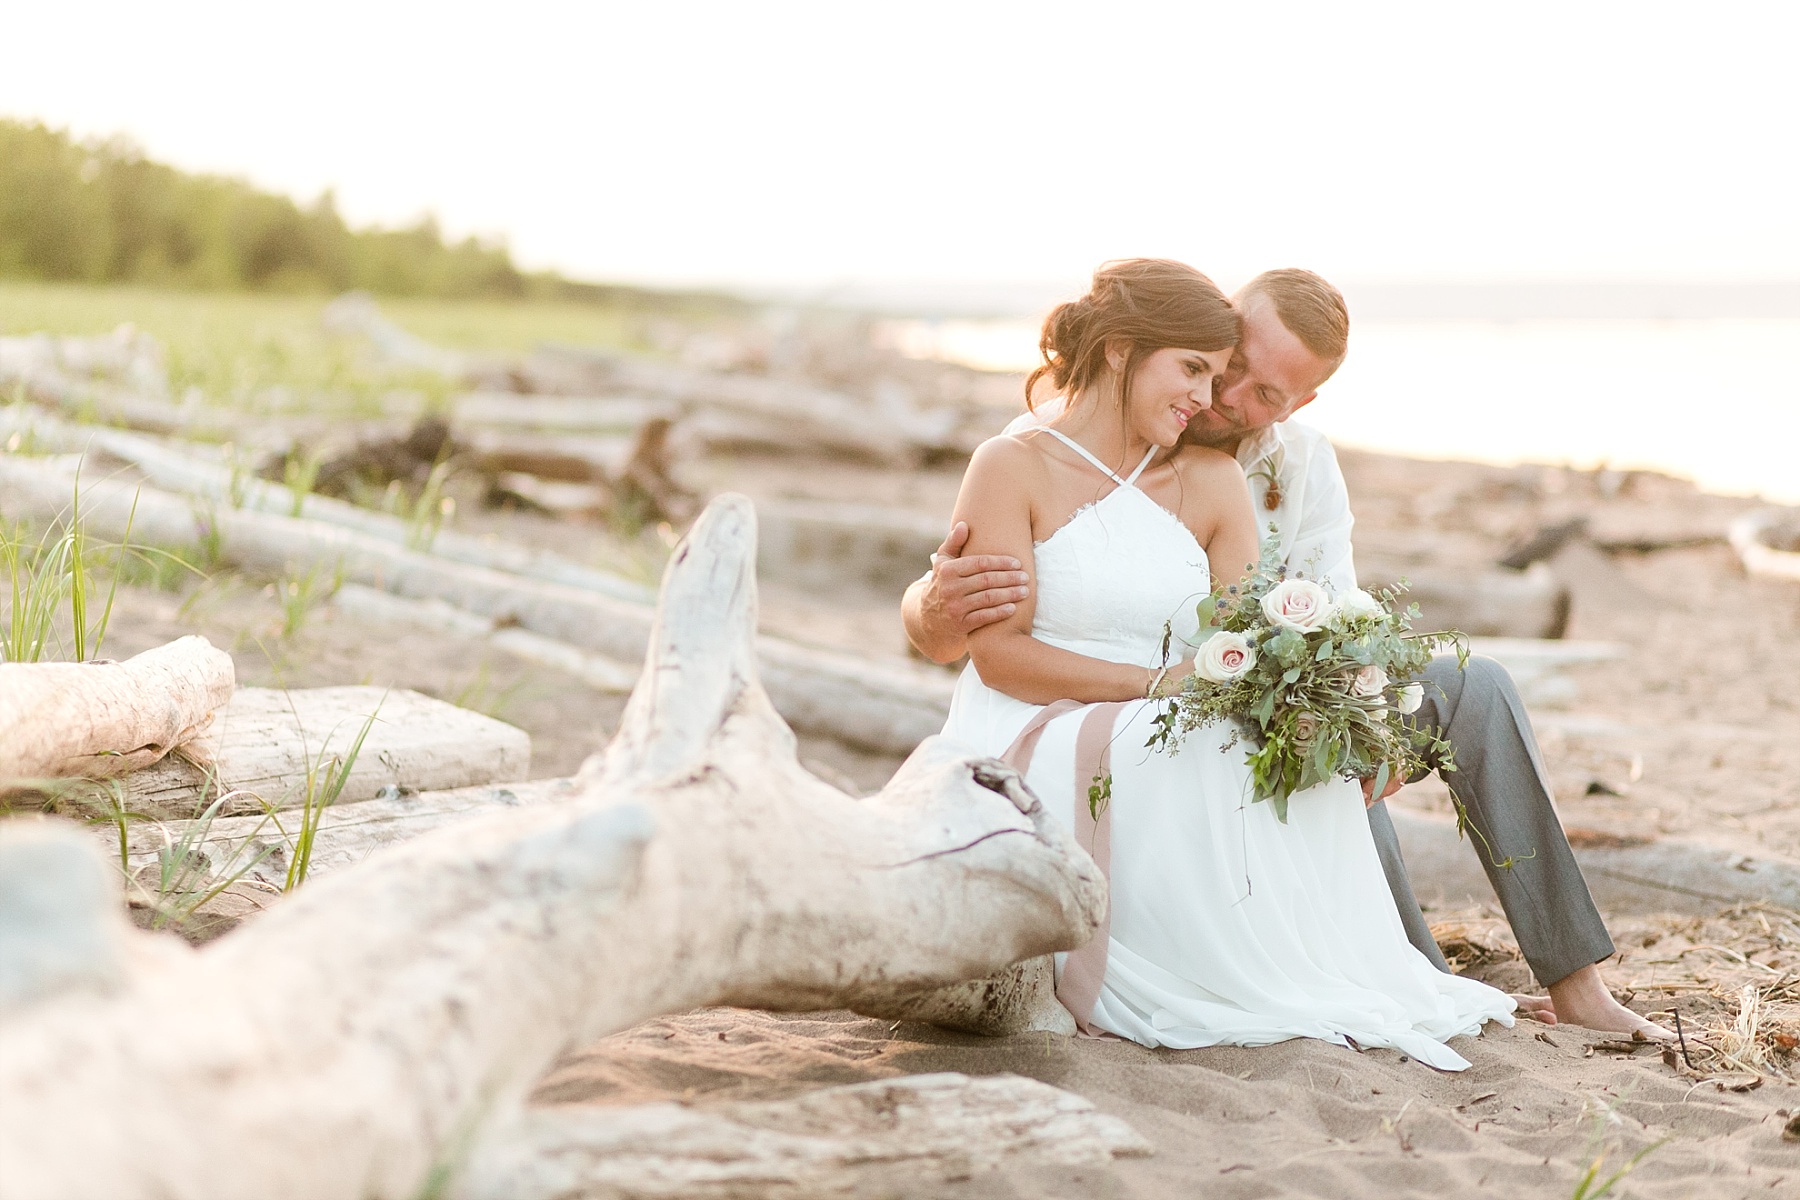 Ashley & James' wedding on the shores of Lake Superior.